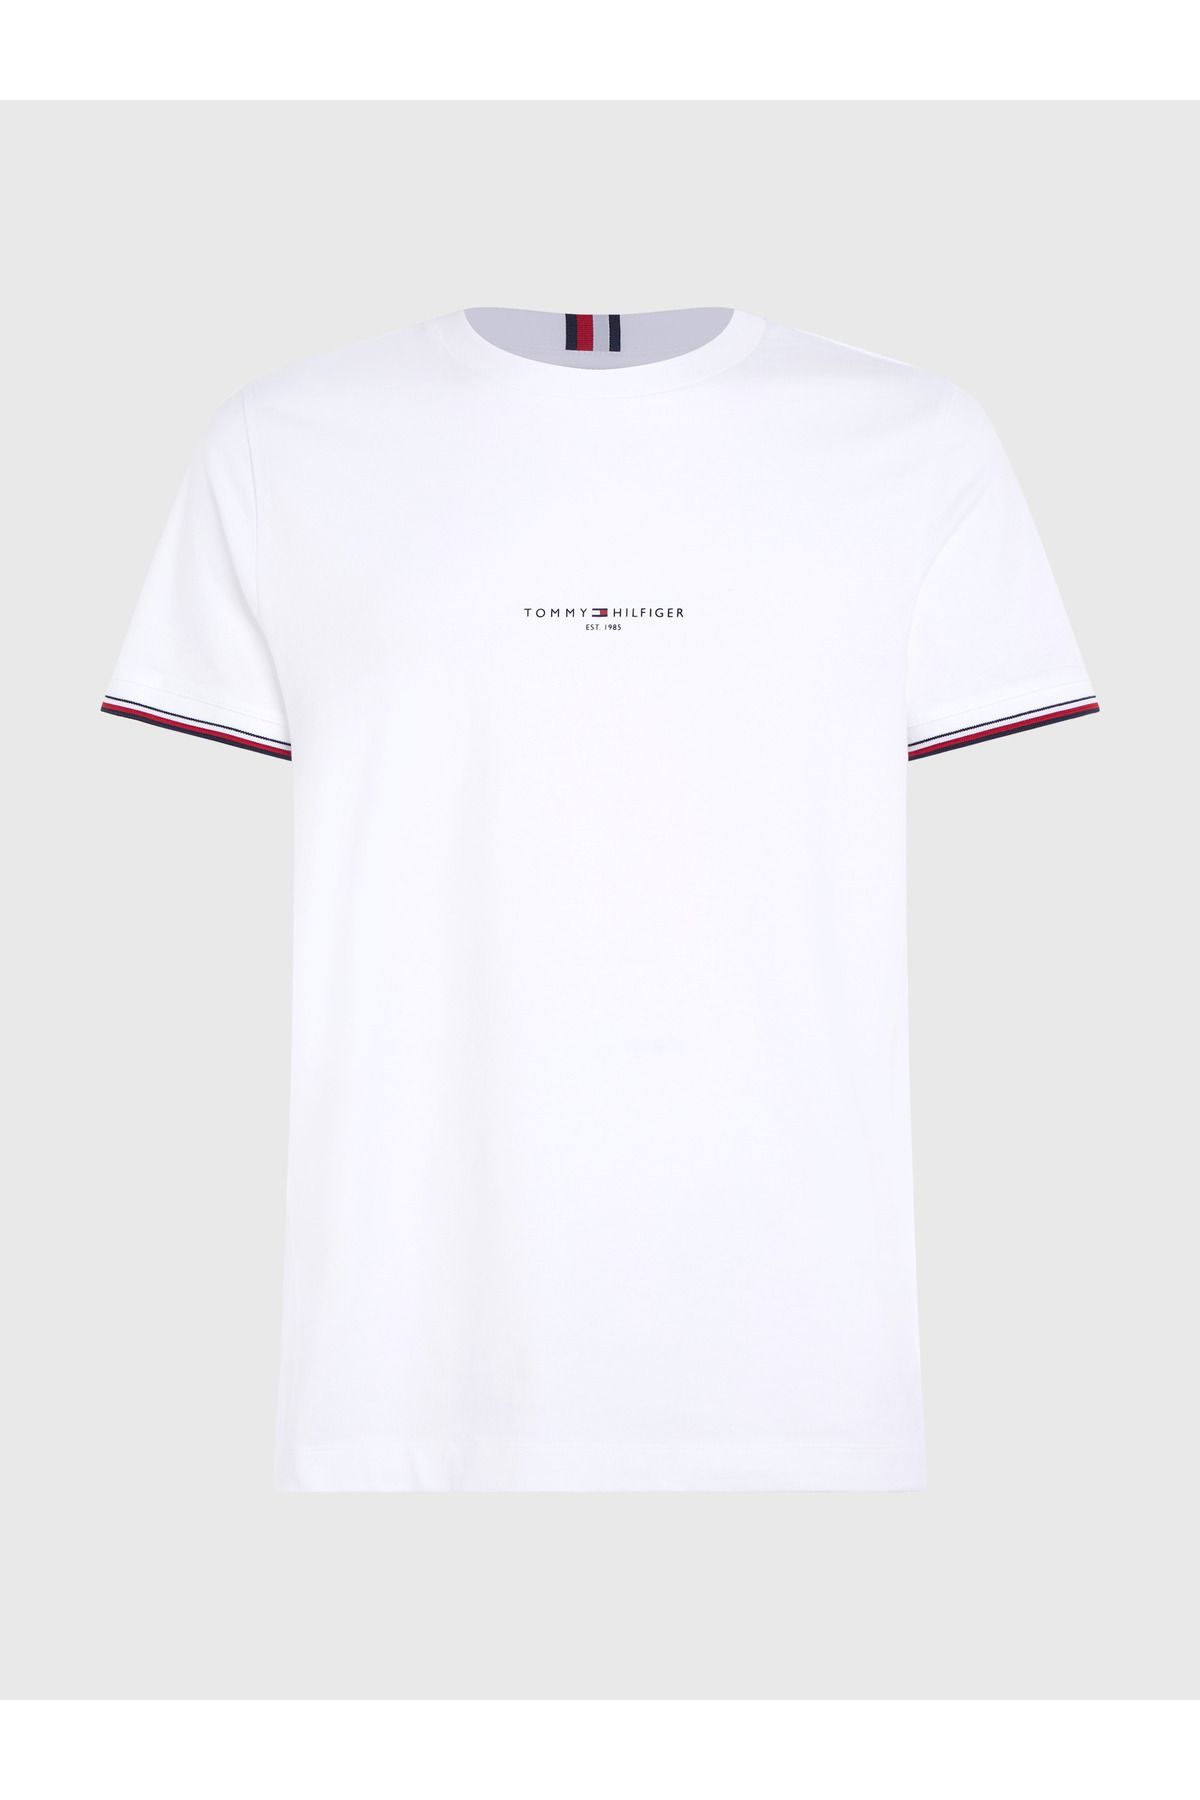 Tommy Hilfiger Erkek Marka Logolu Pamuklu Bisiklet Yakalı Beyaz T-Shirt MW0MW32584-YBR